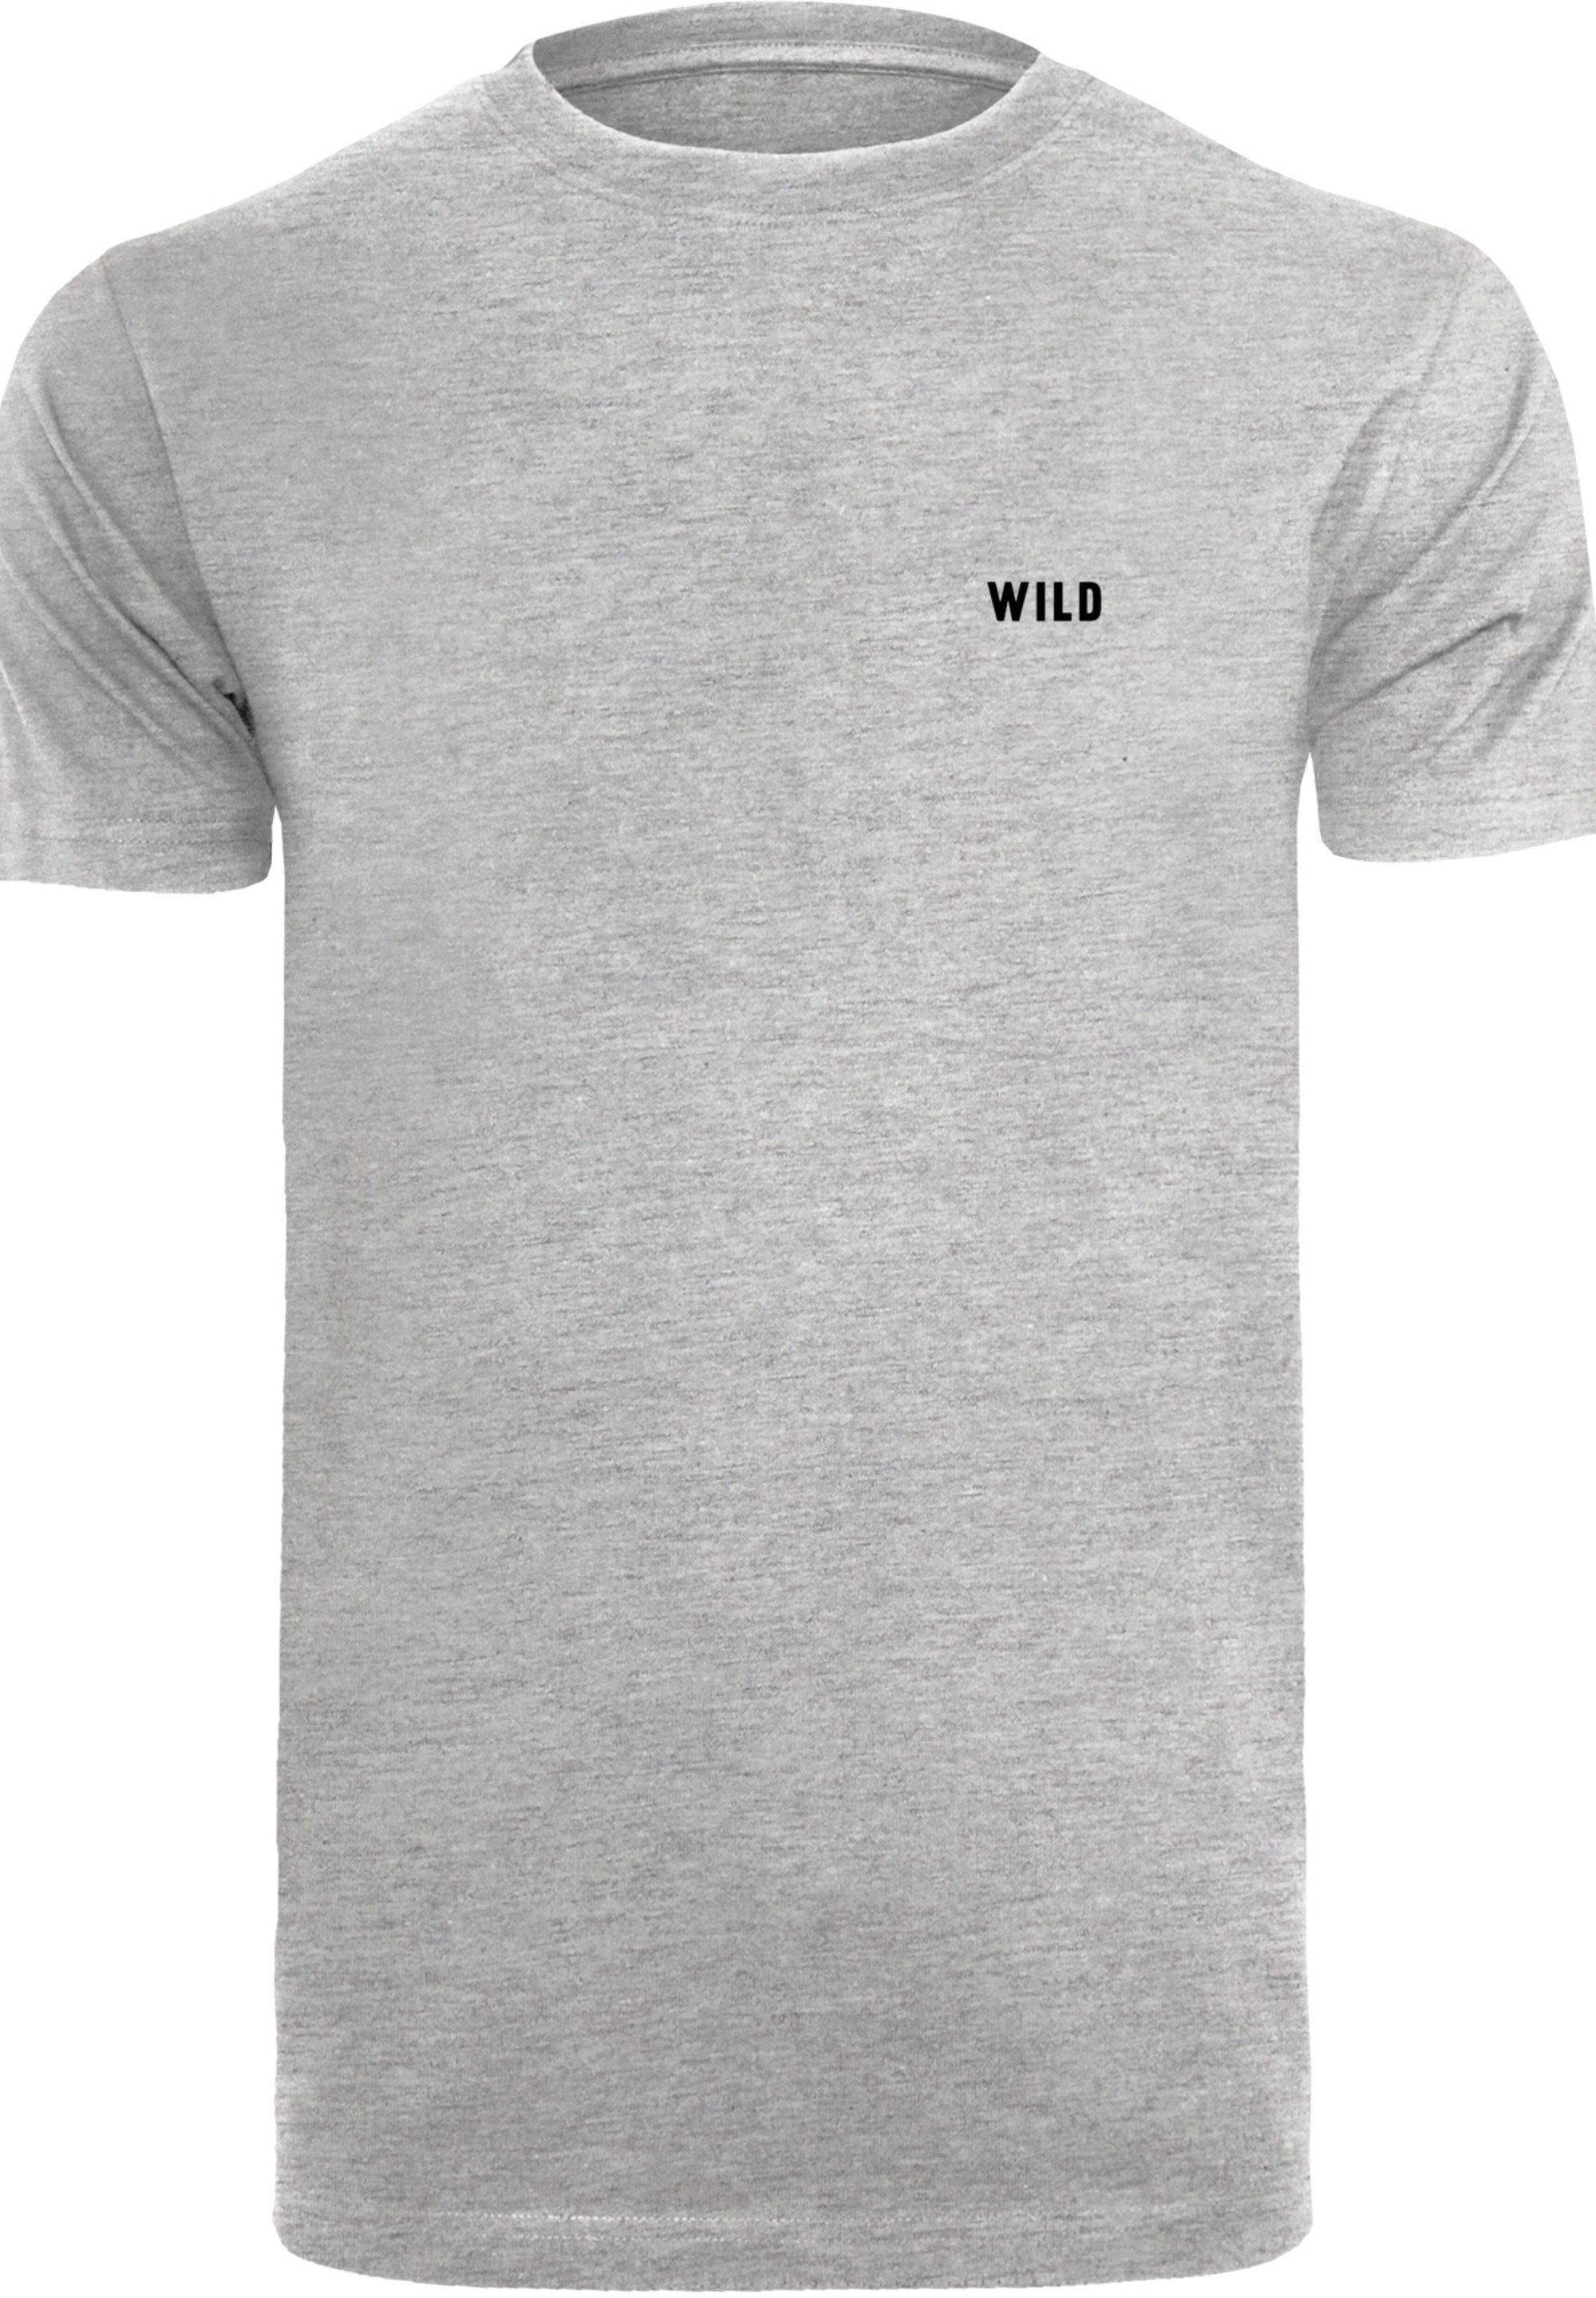 Wild heather F4NT4STIC 2022, Jugendwort T-Shirt grey slang